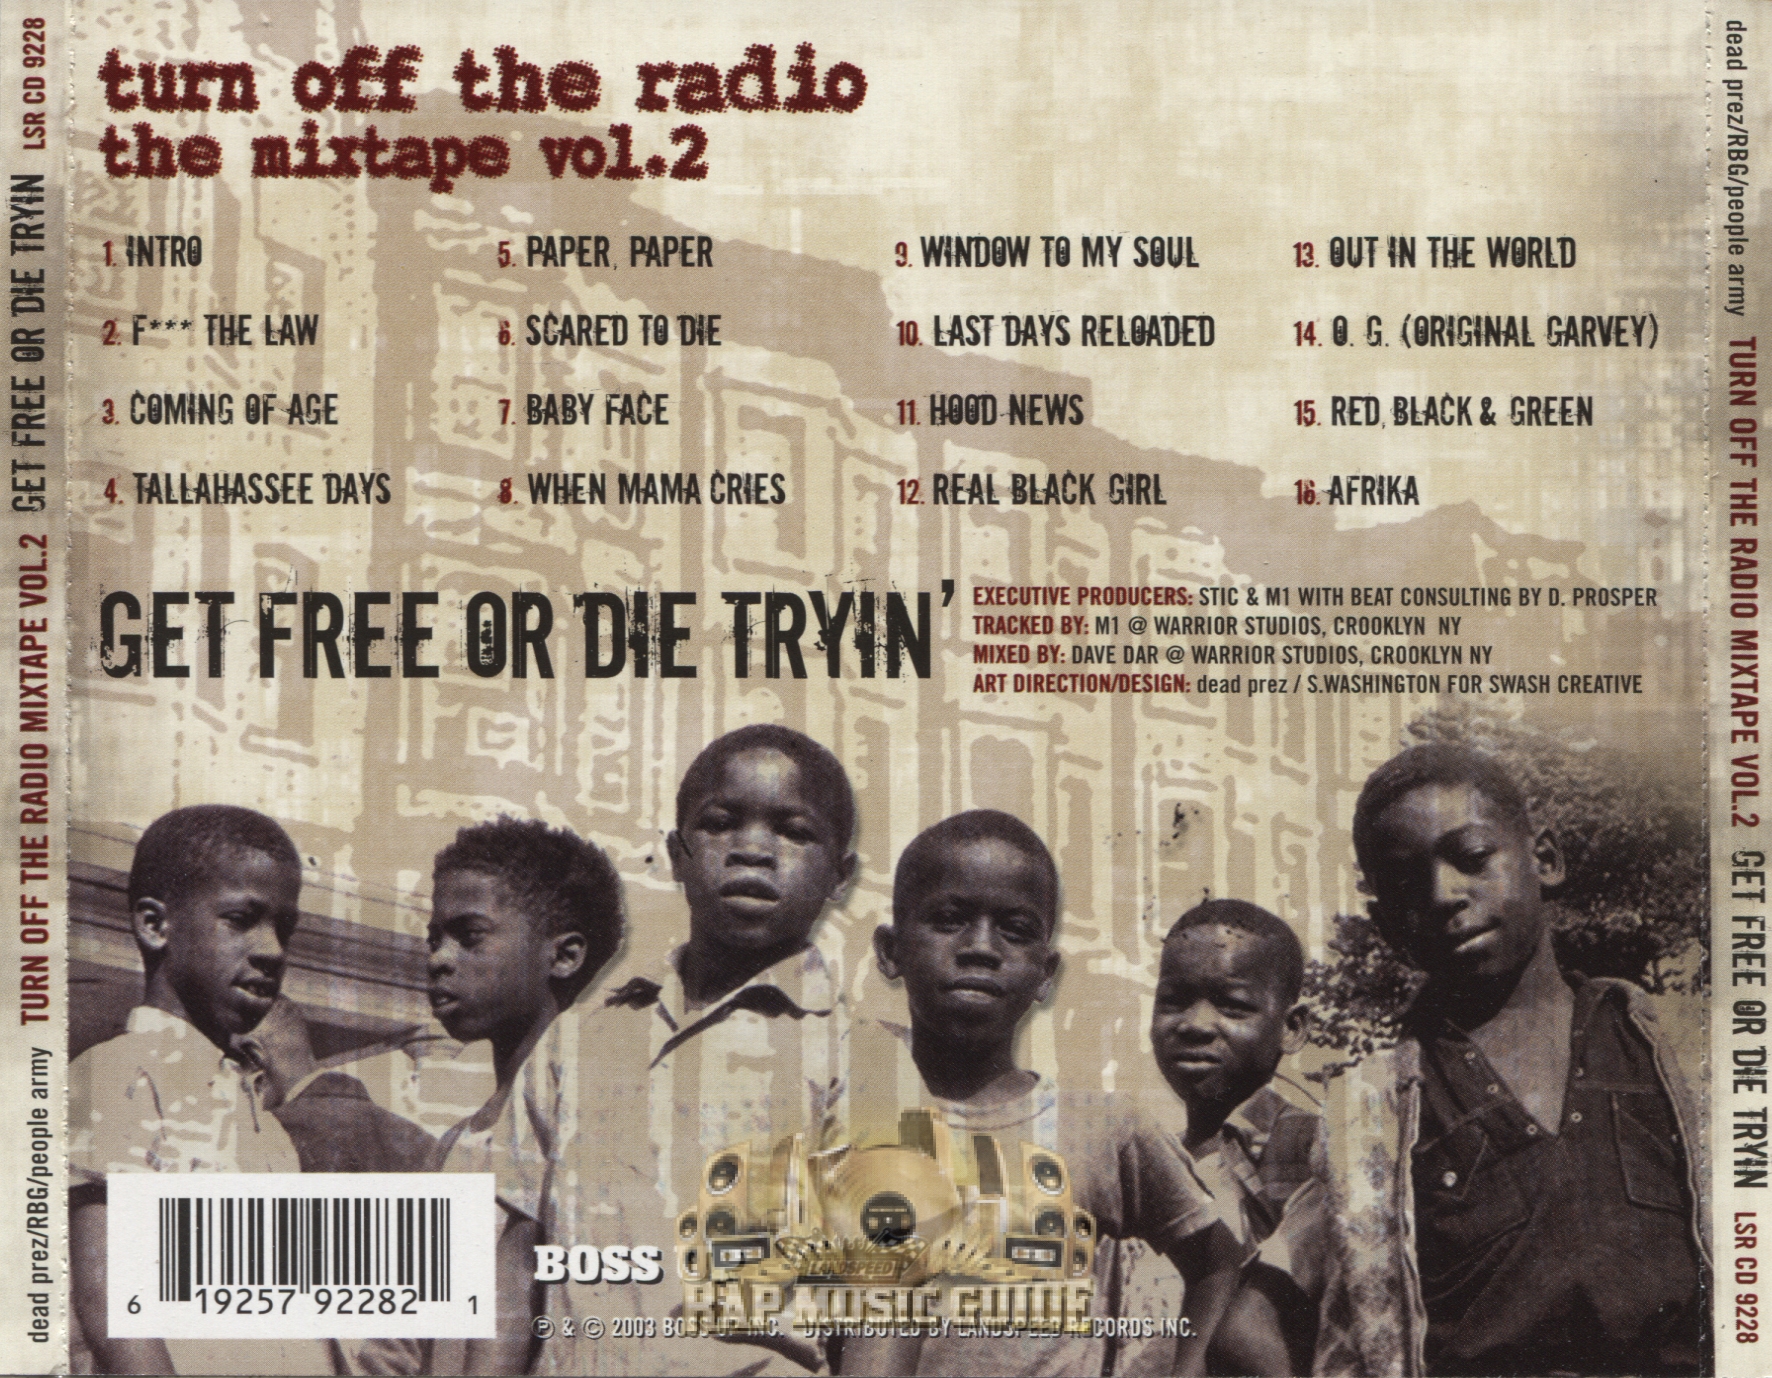 At passe kasket Understrege Dead Prez, RBG, People Army Presents - Turn Off The Radio Mixtape Vol. 2  Get Free Or Die Tryin': CD | Rap Music Guide